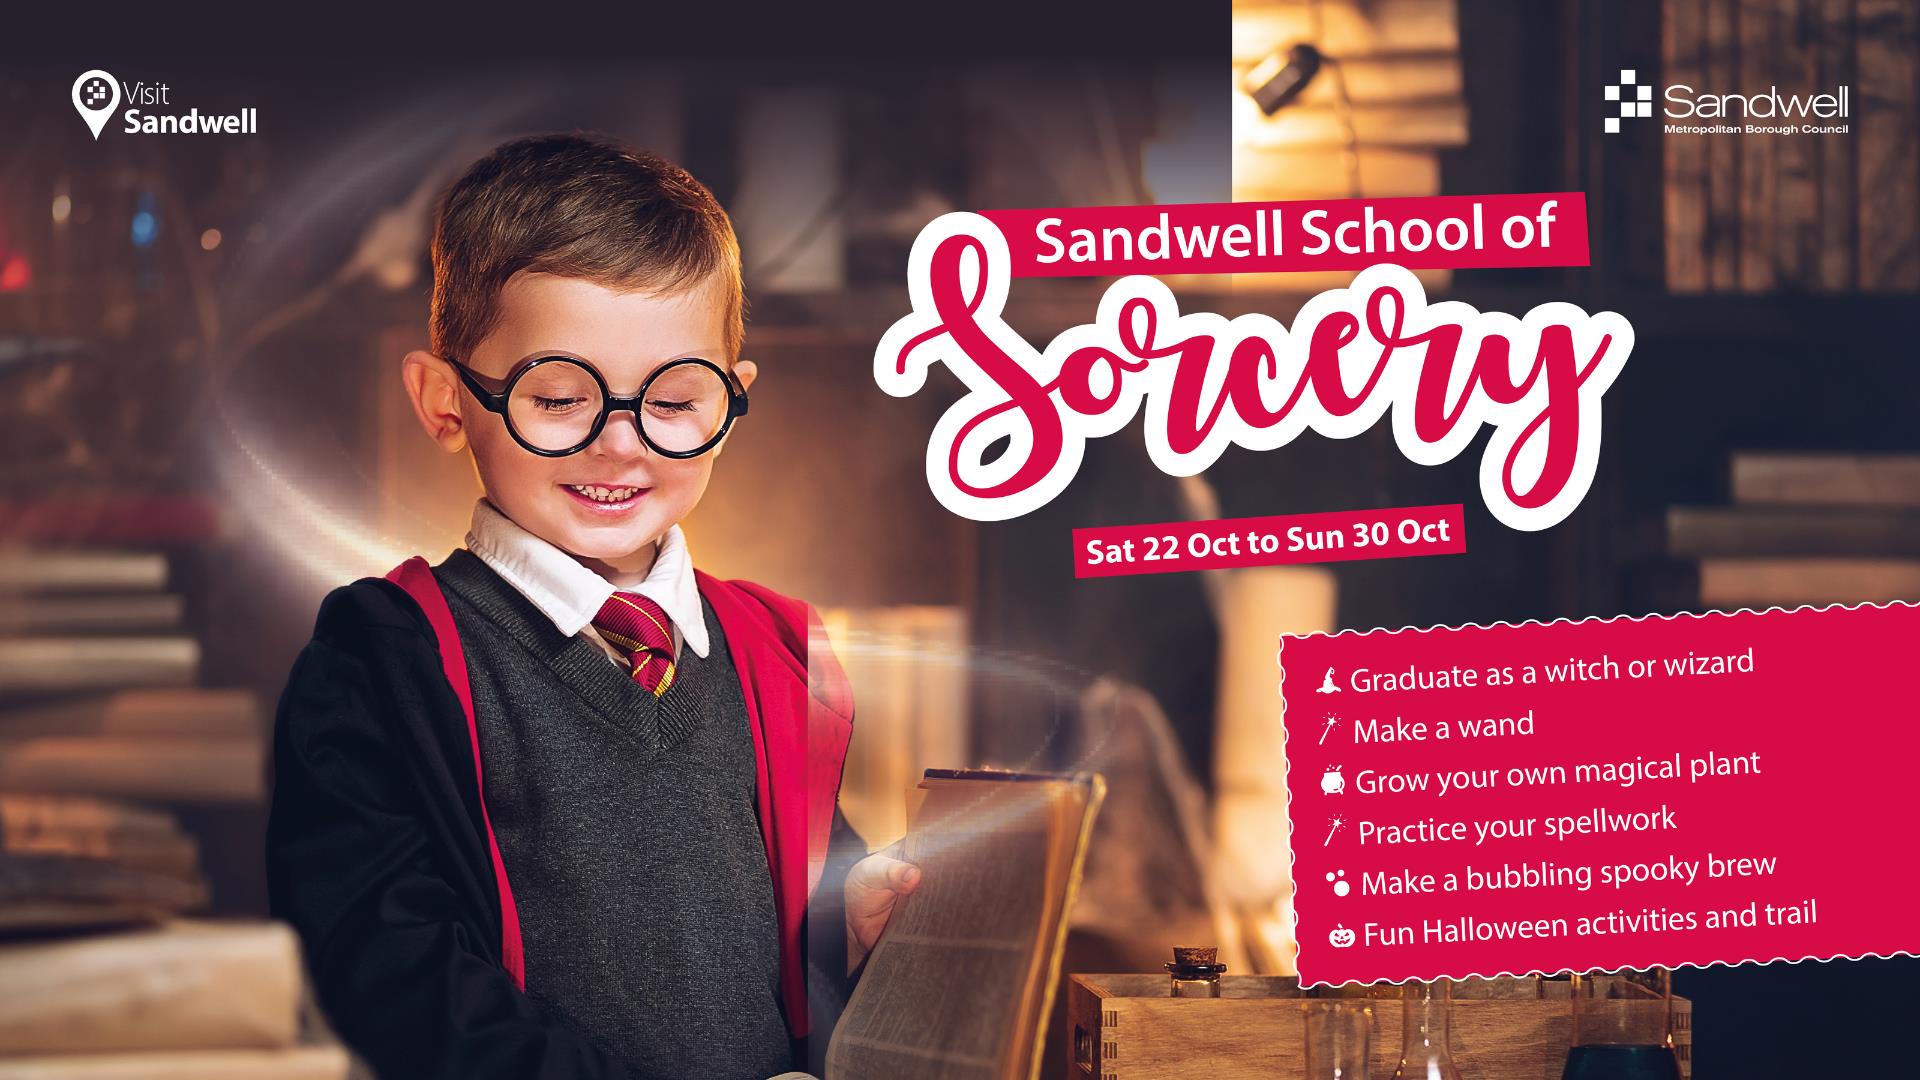 Sandwell School of Sorcery